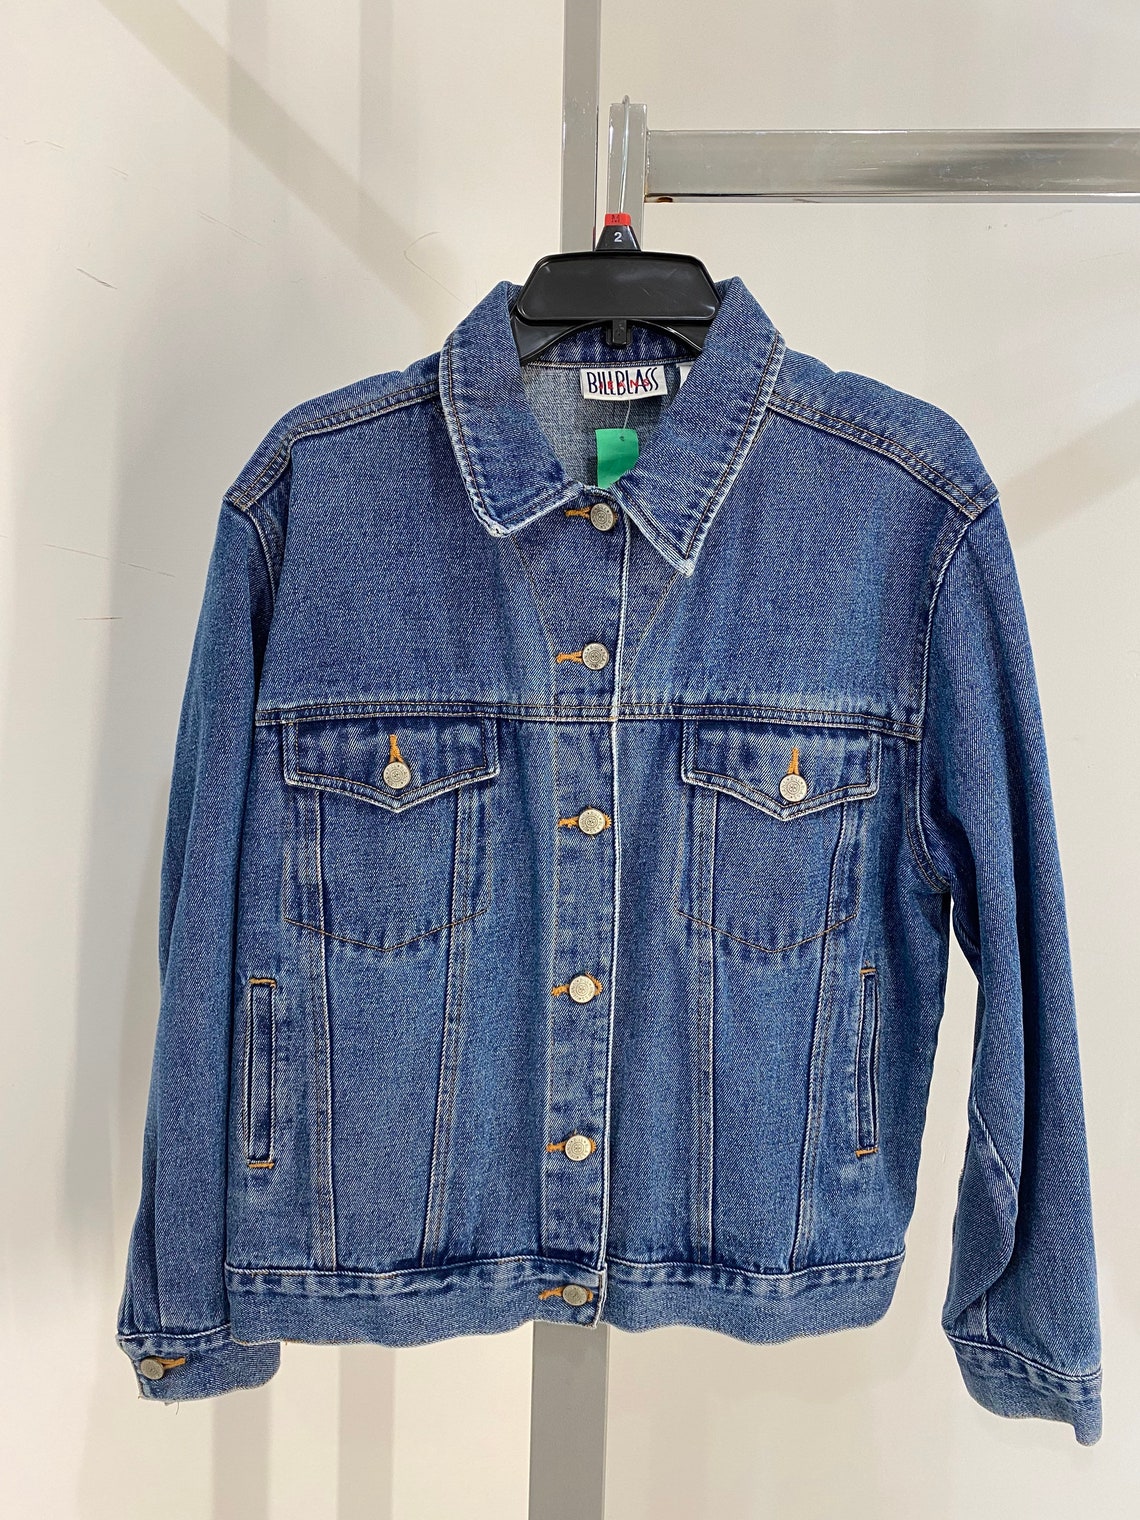 Vintage Billblass jeans denim jacket / M | Etsy